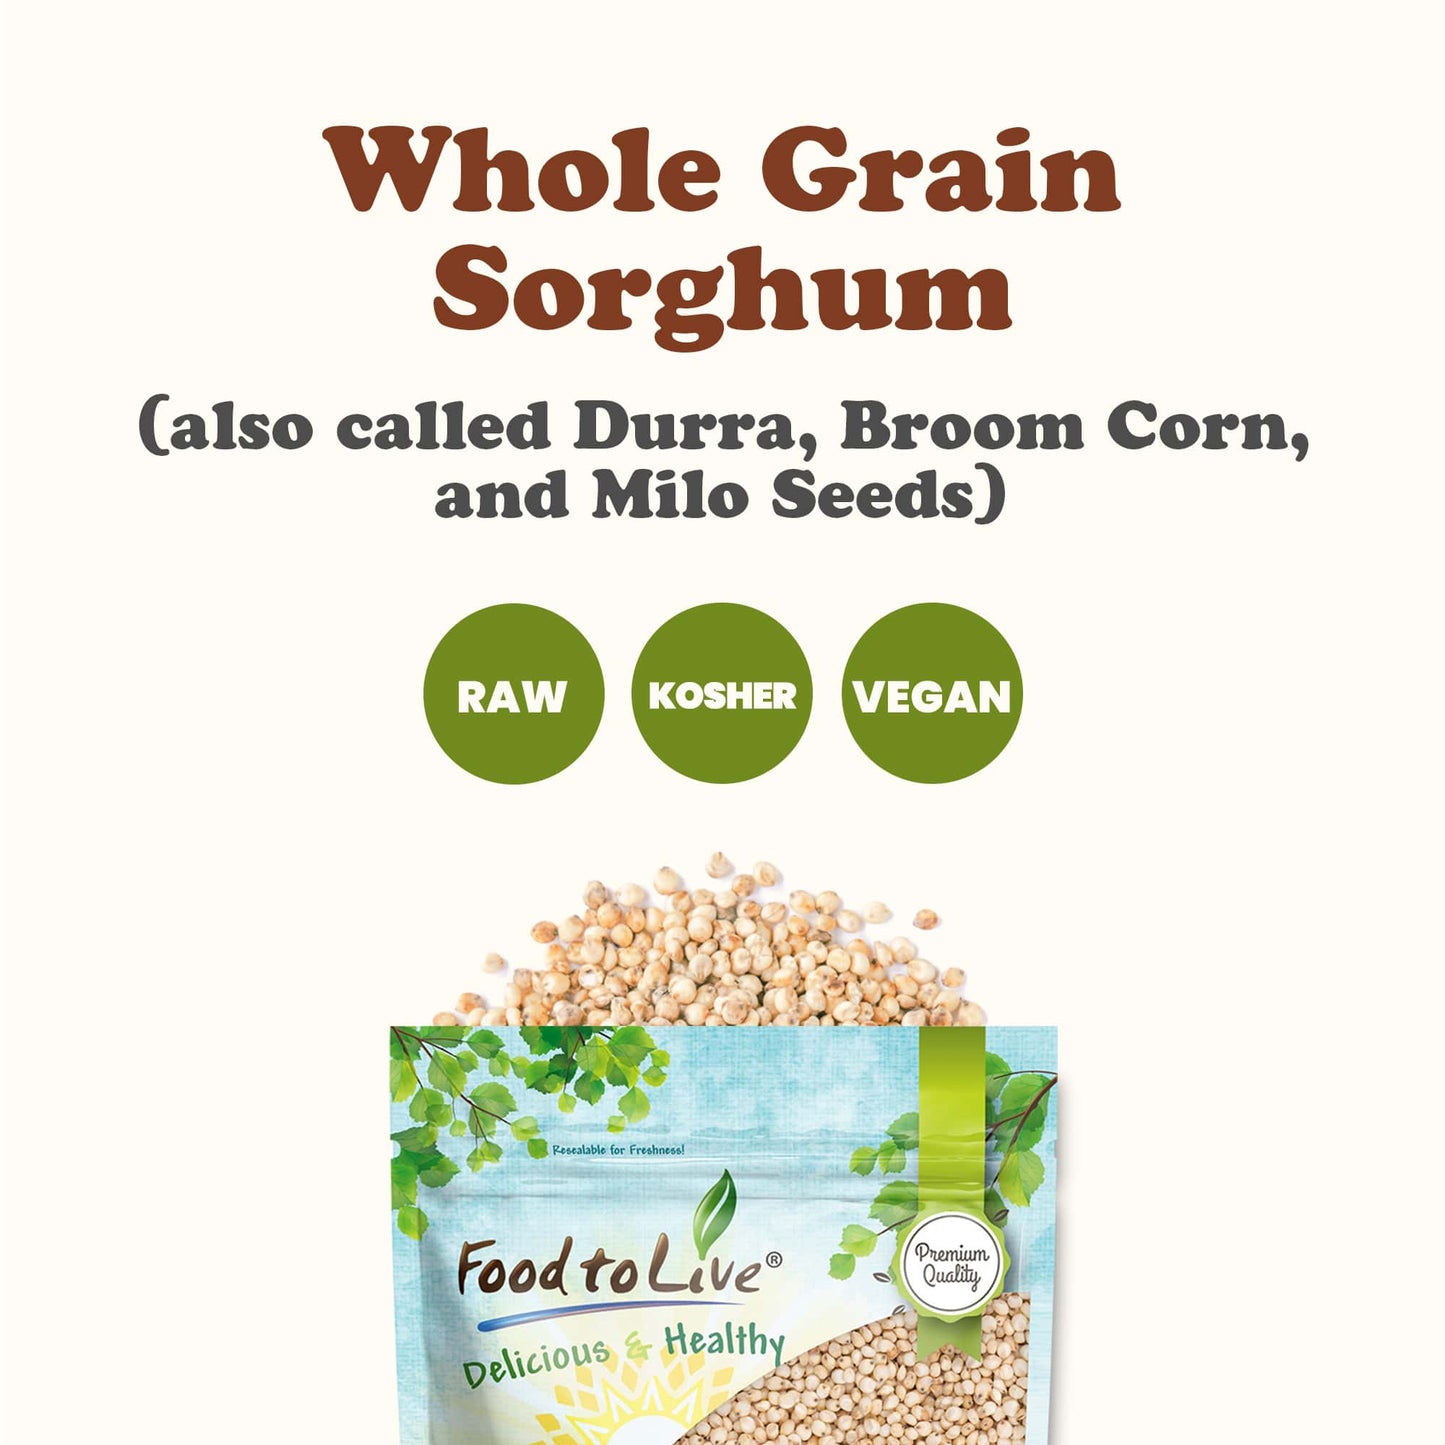 Whole Grain Sorghum — Premium White Groats. Raw Milo Seeds. Vegan, Bulk Broom-corn. Durra is Great for Making Flour and Popped Jowar Dhani